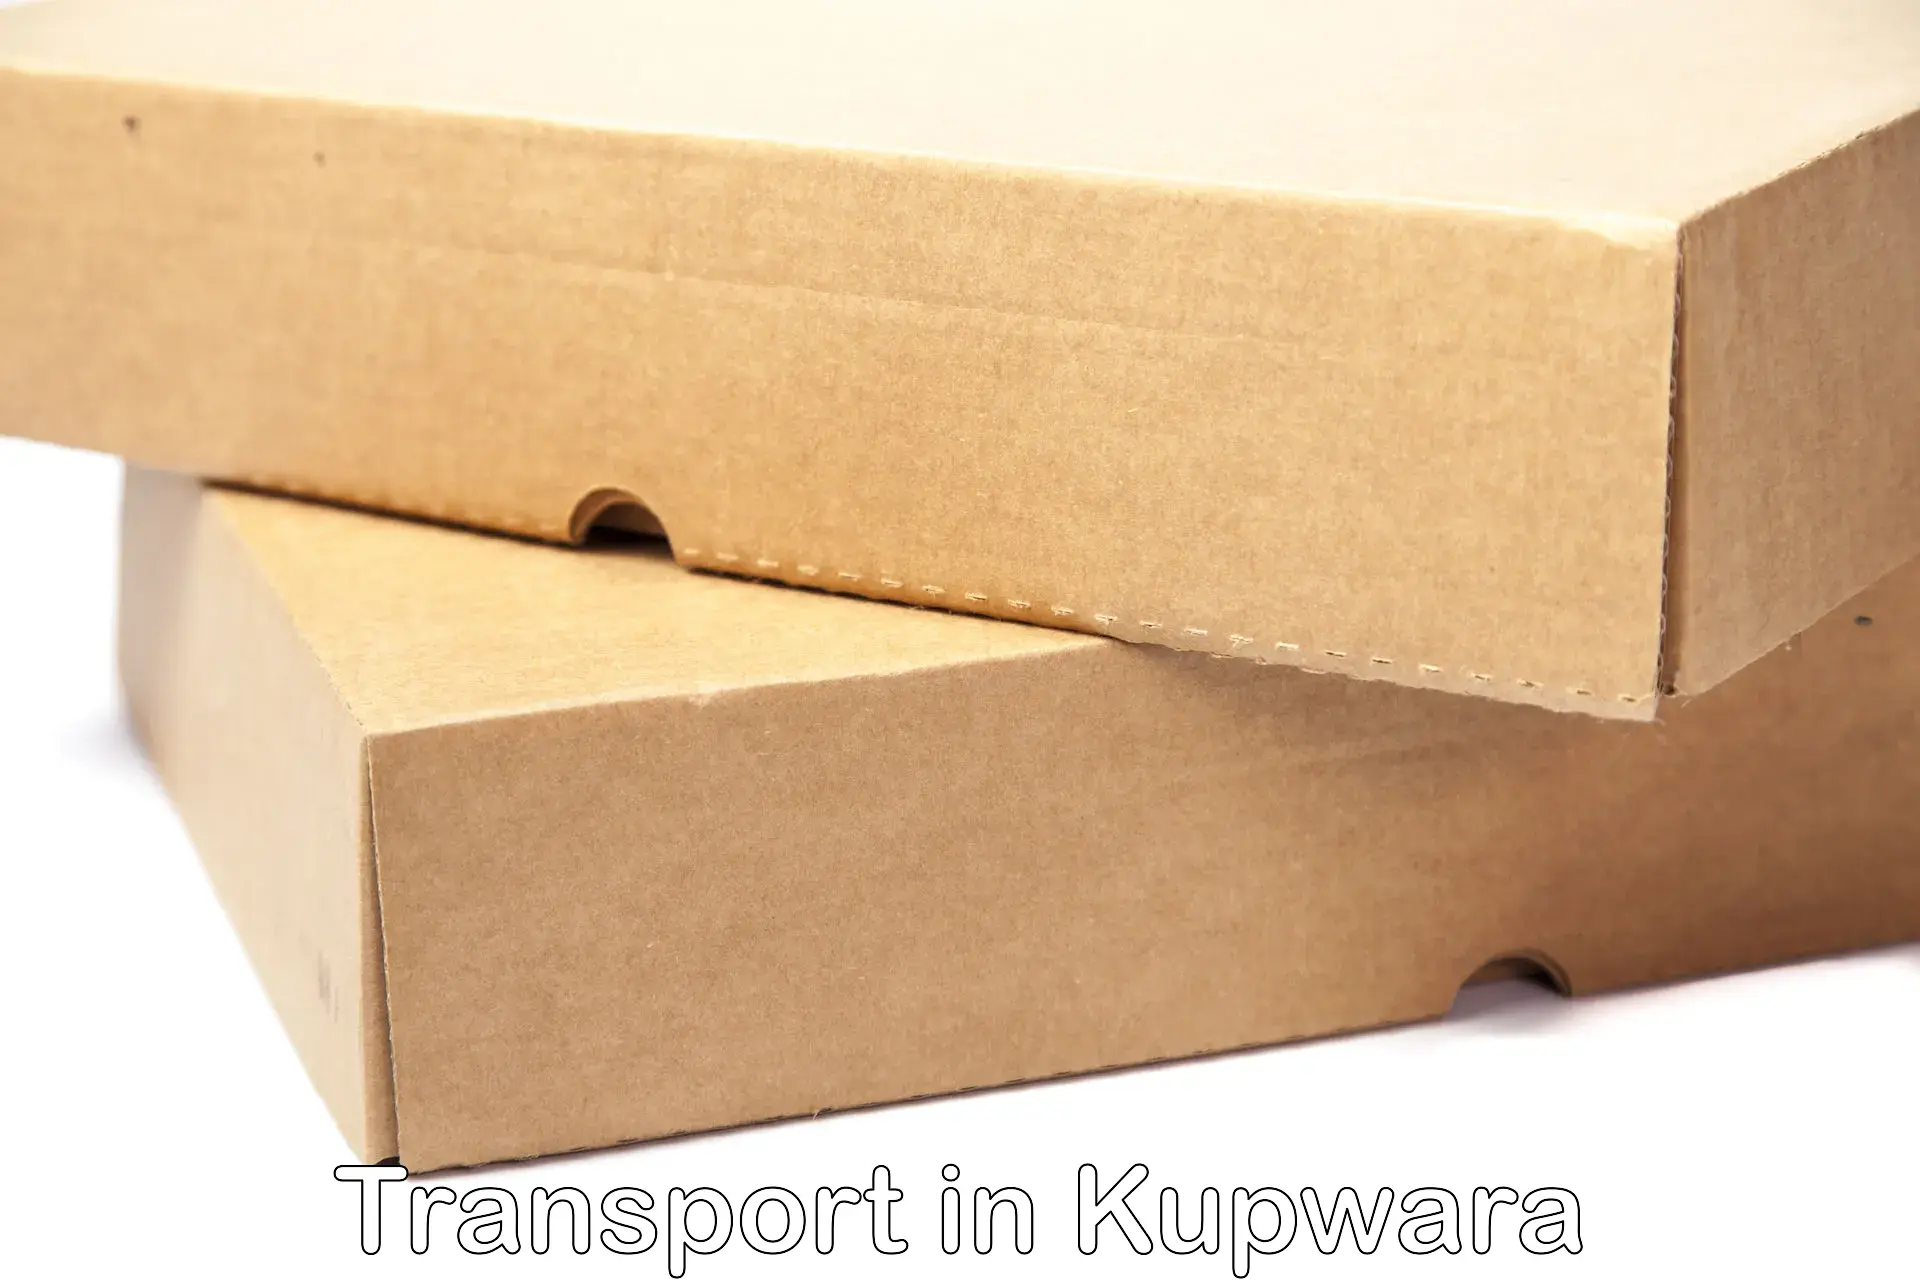 Transport in sharing in Kupwara